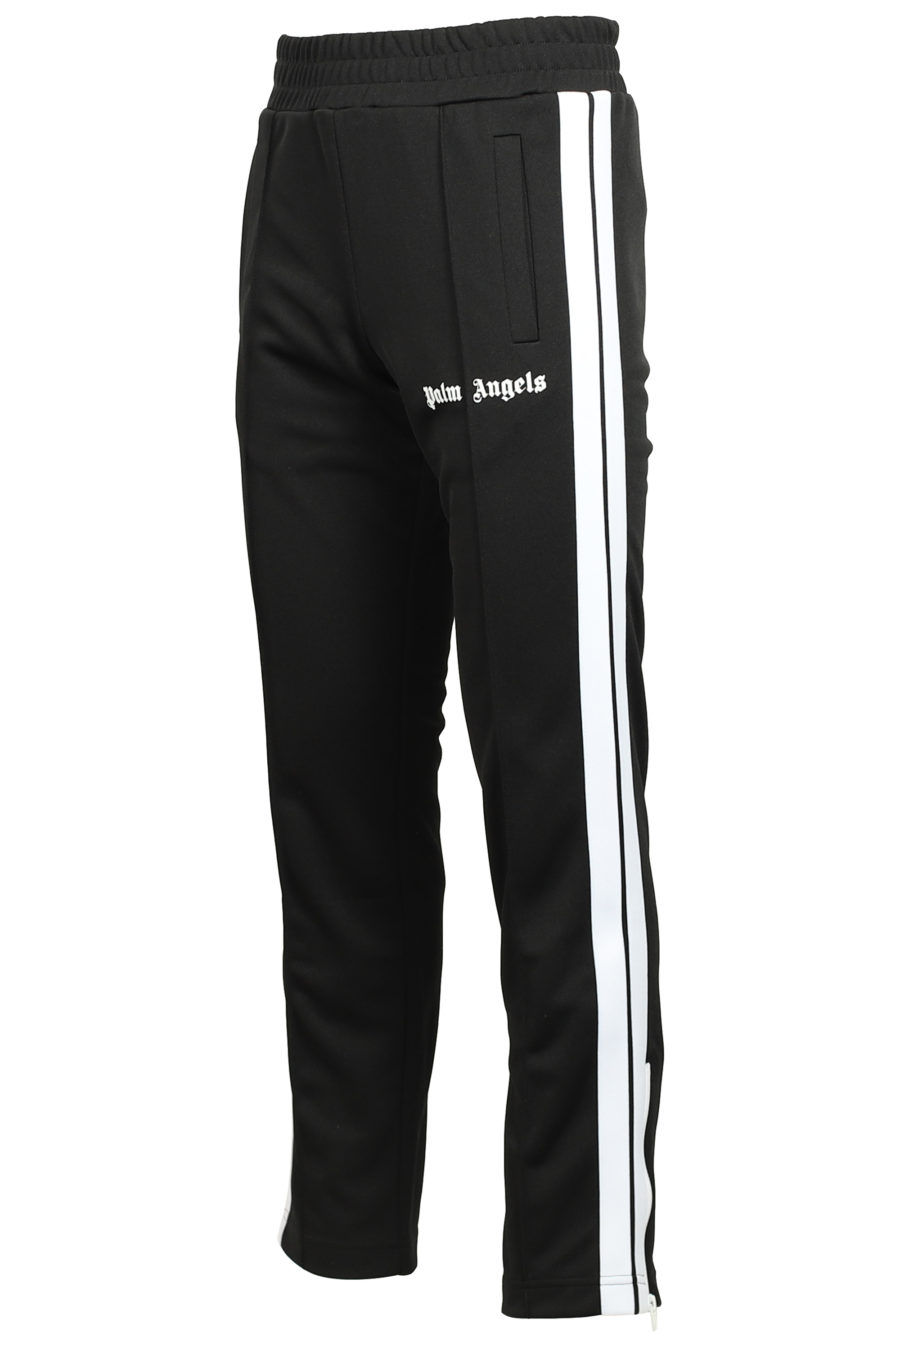 Pantalón negro con logotipo y rayas laterales - IMG 3749